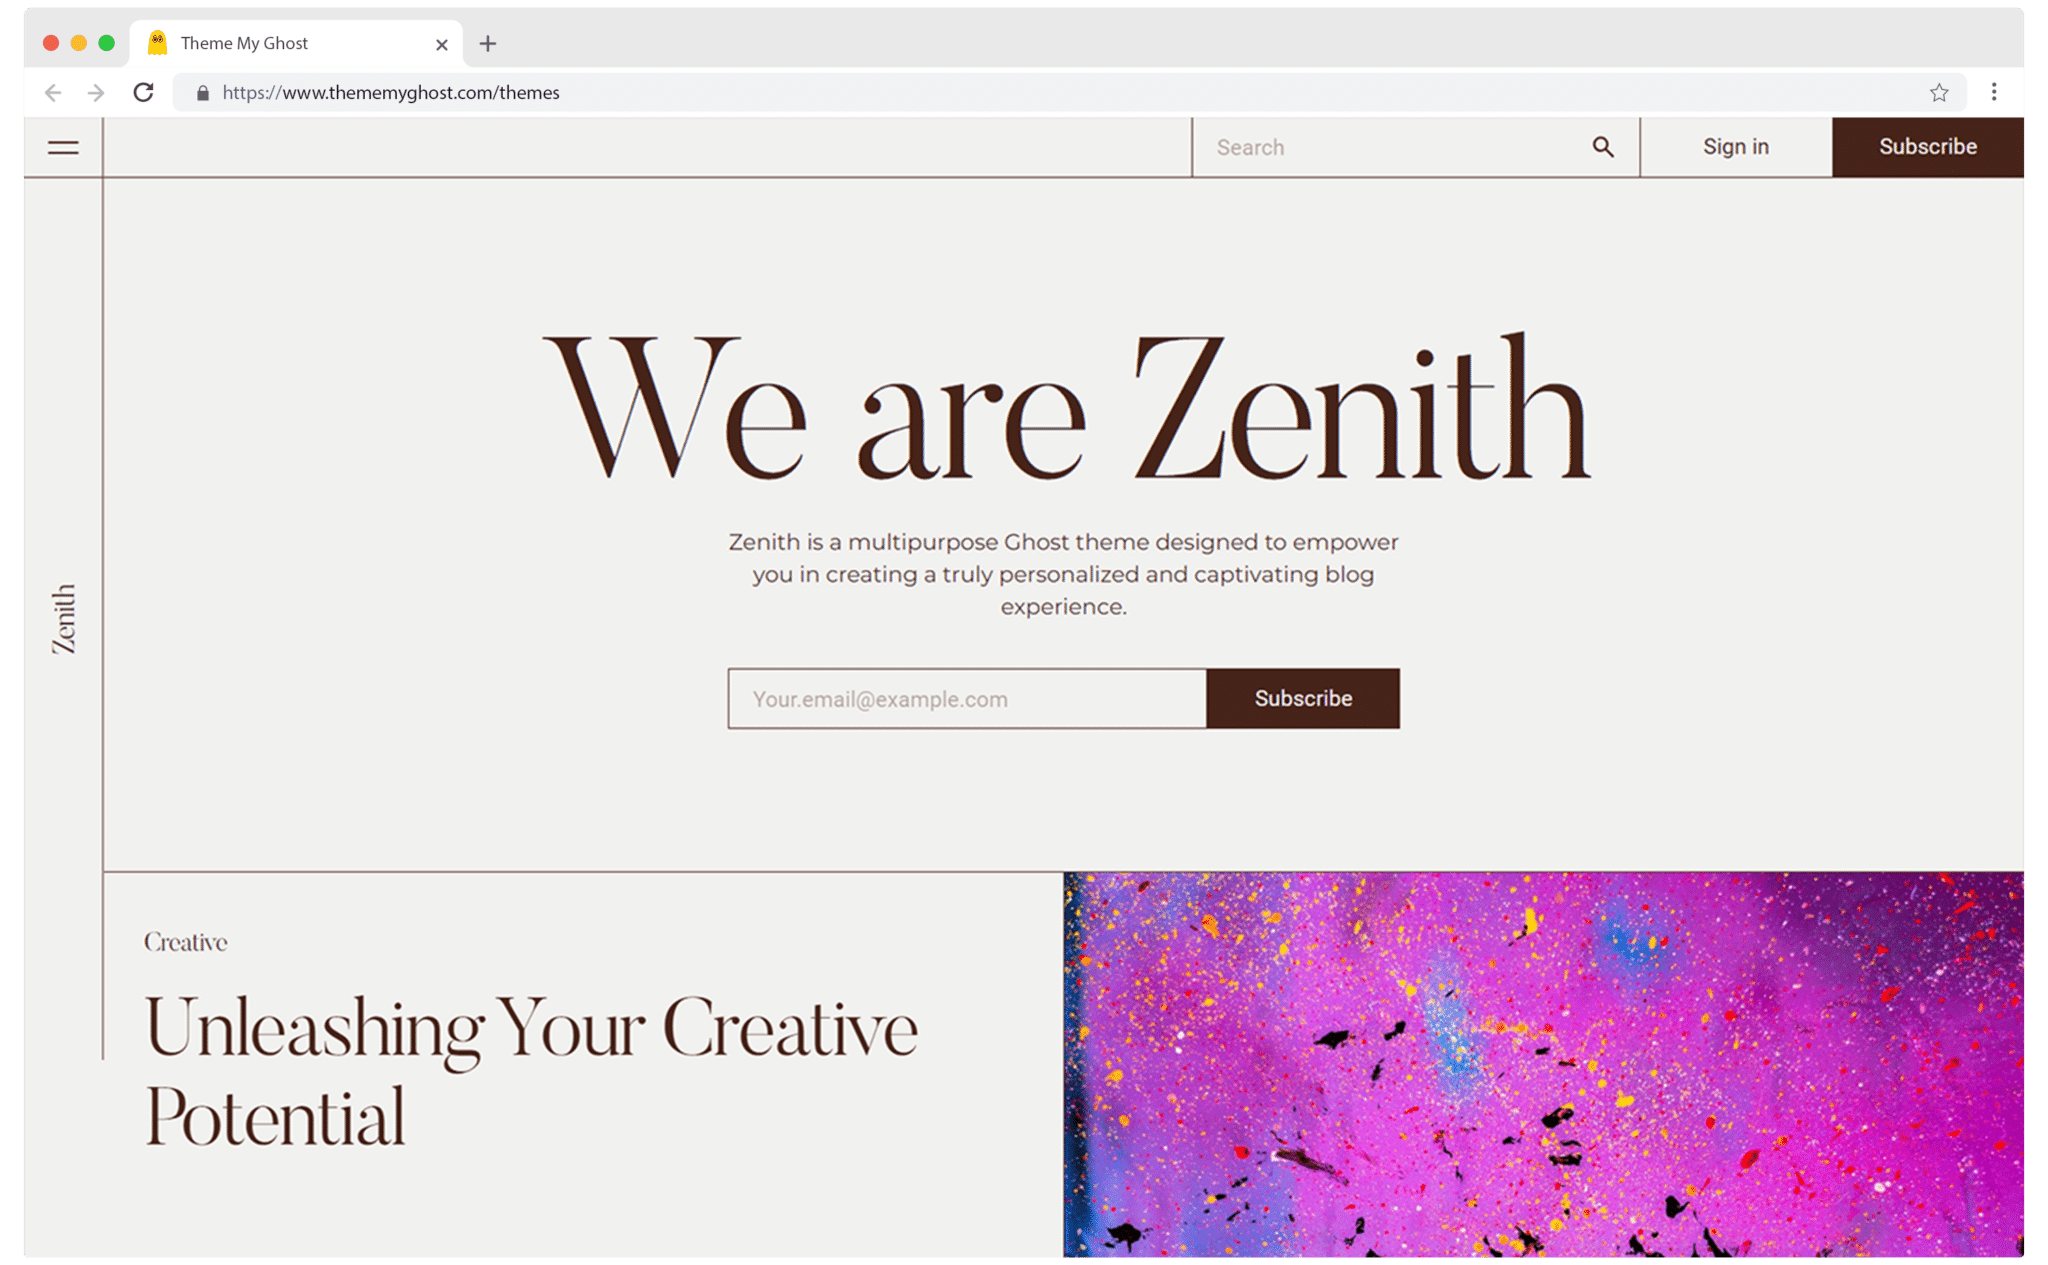 Zenith Premium Ghost theme with Brutalism design and Dark mode 7